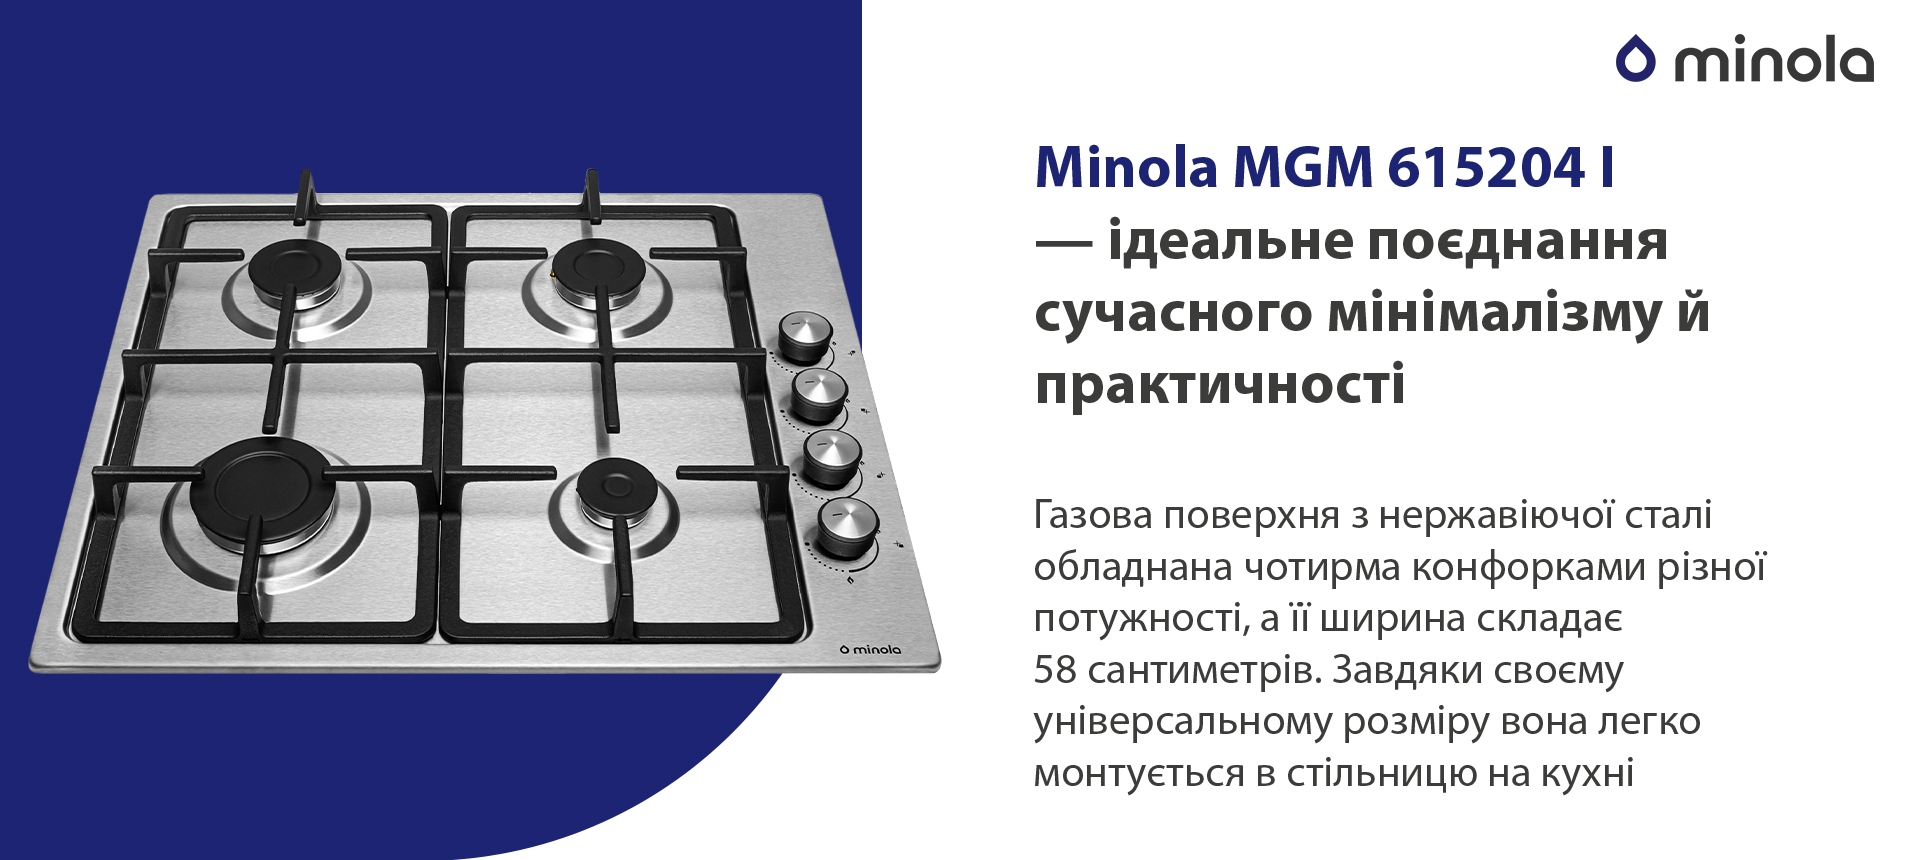 Minola MGM 615204 I в магазине в Киеве - фото 10